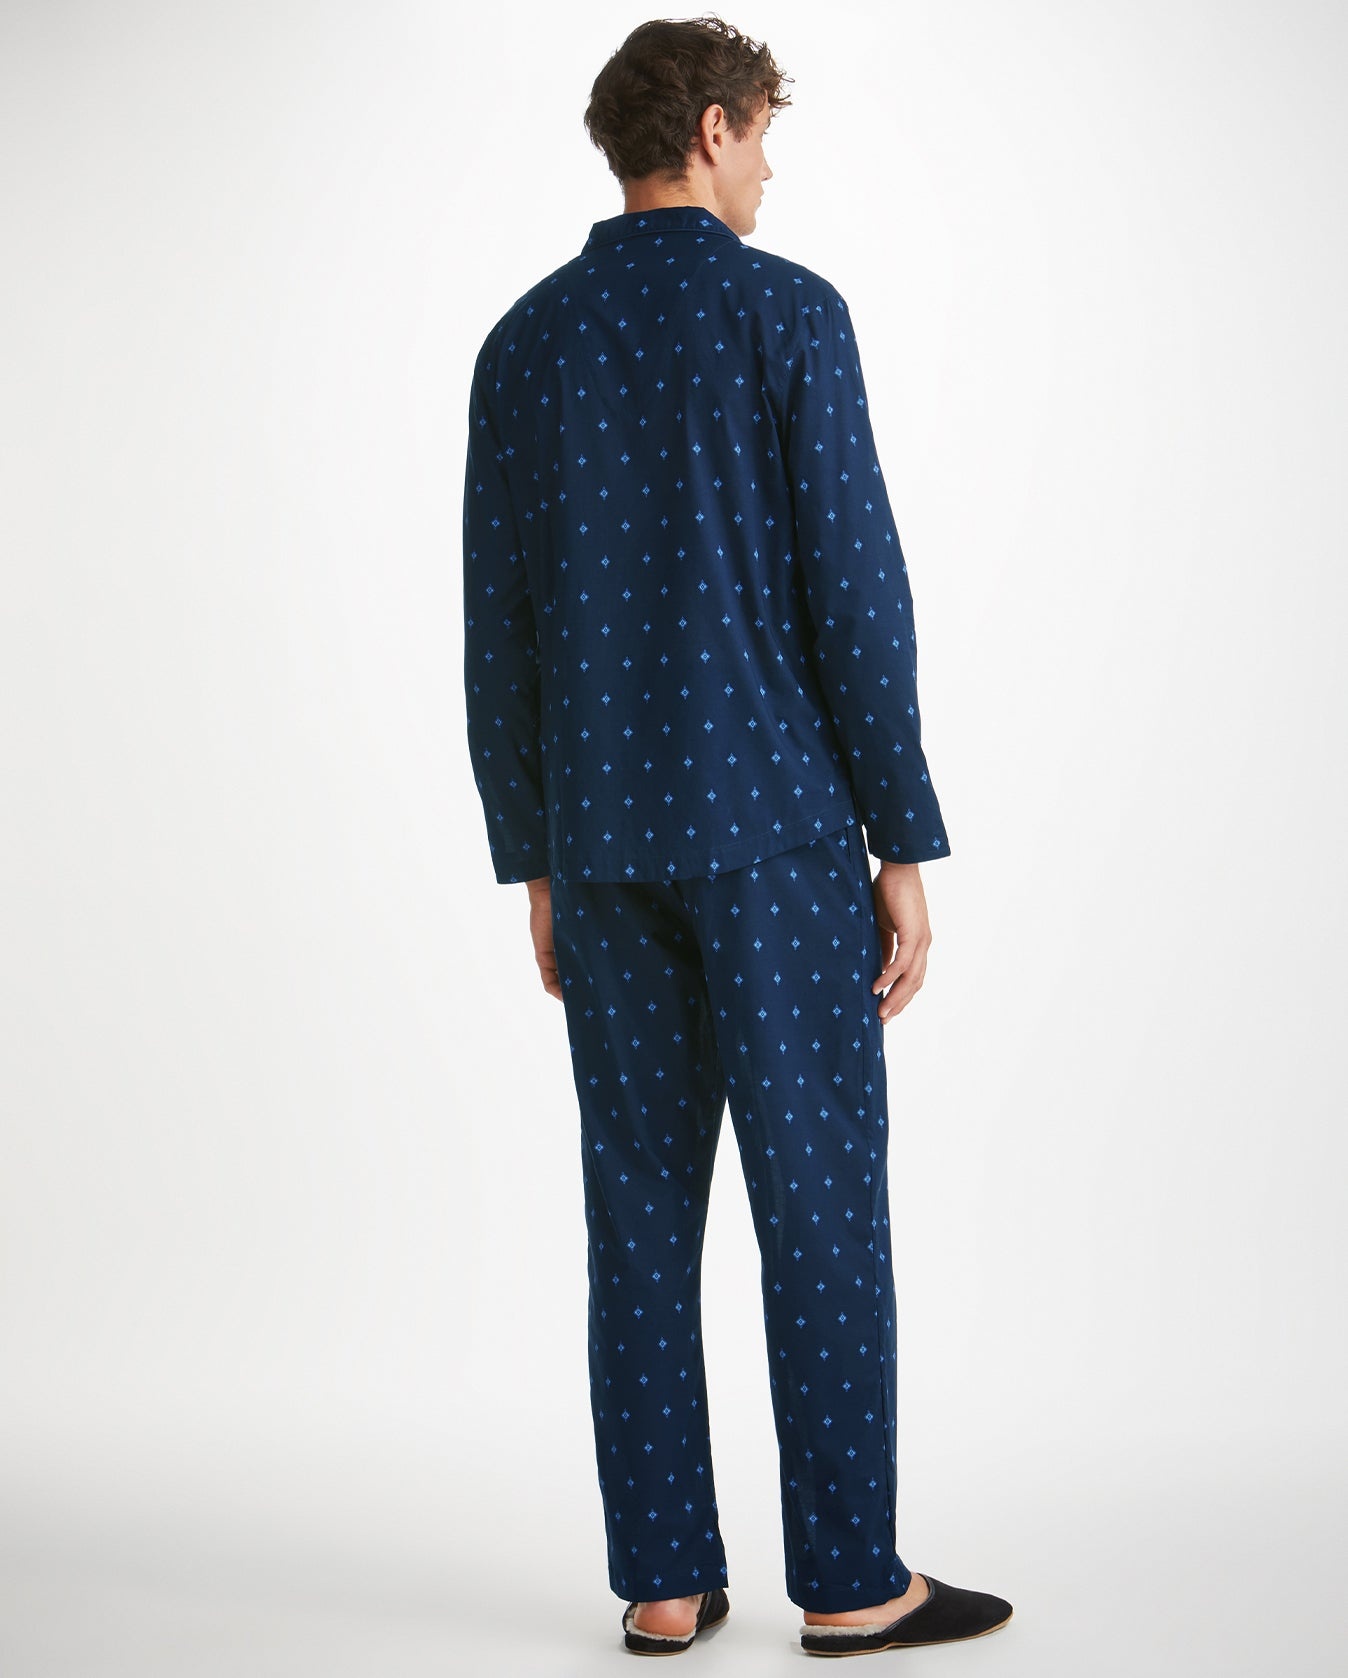 Nelson Paisley Cotton Modern Fit Pyjama Set - Navy - 3